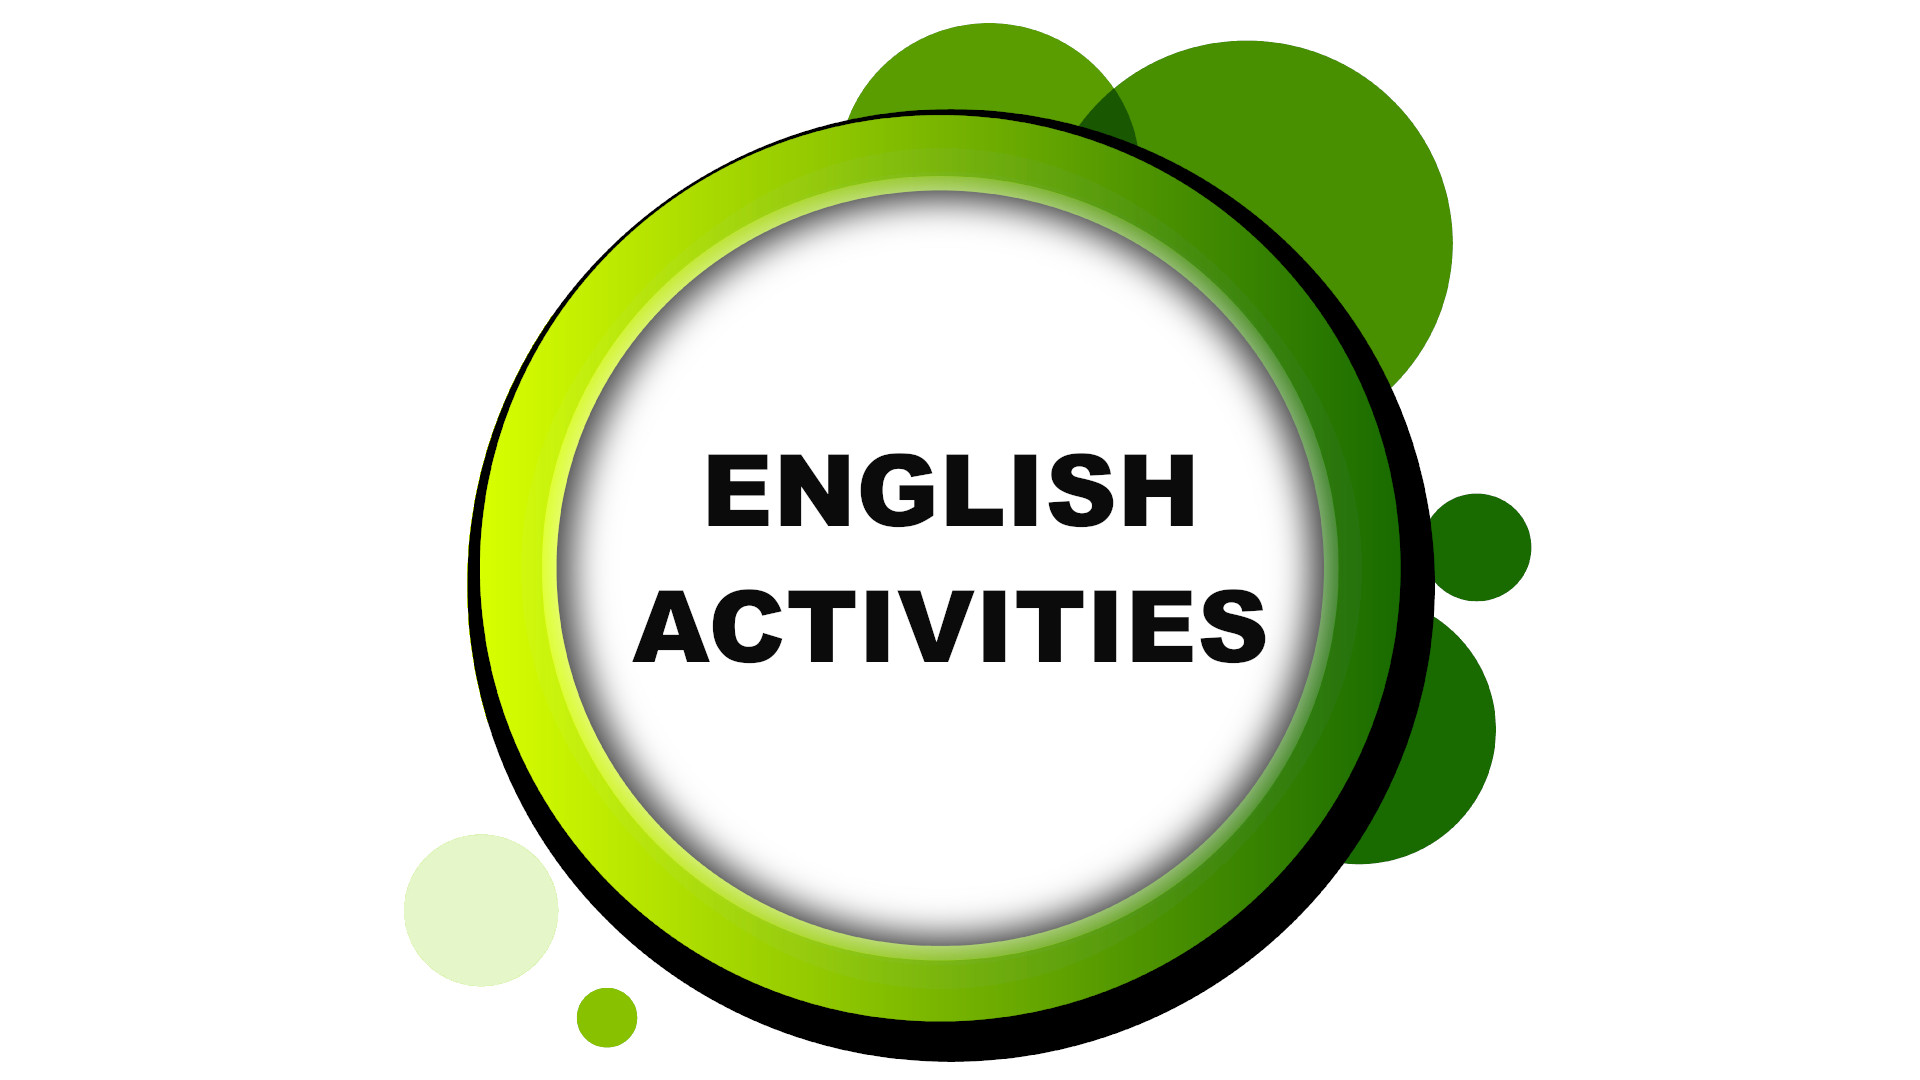 ENGLISH ACTIVITIES